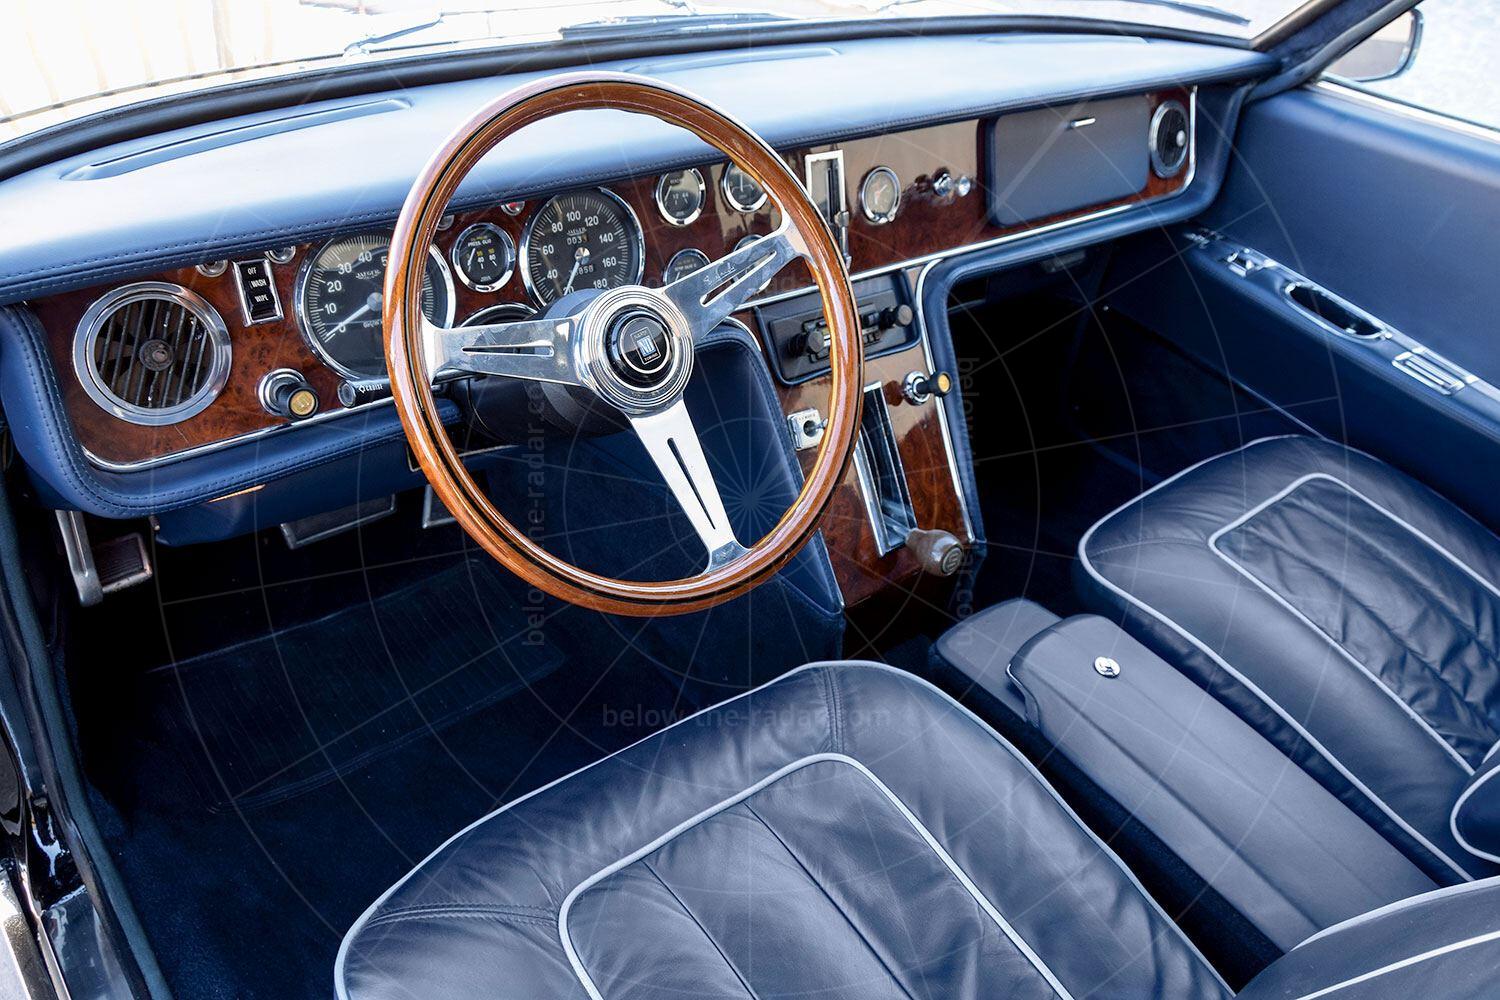 1971 Stutz Blackhawk sedan interior Pic: RM Sotheby's | 1971 Stutz Blackhawk sedan interior